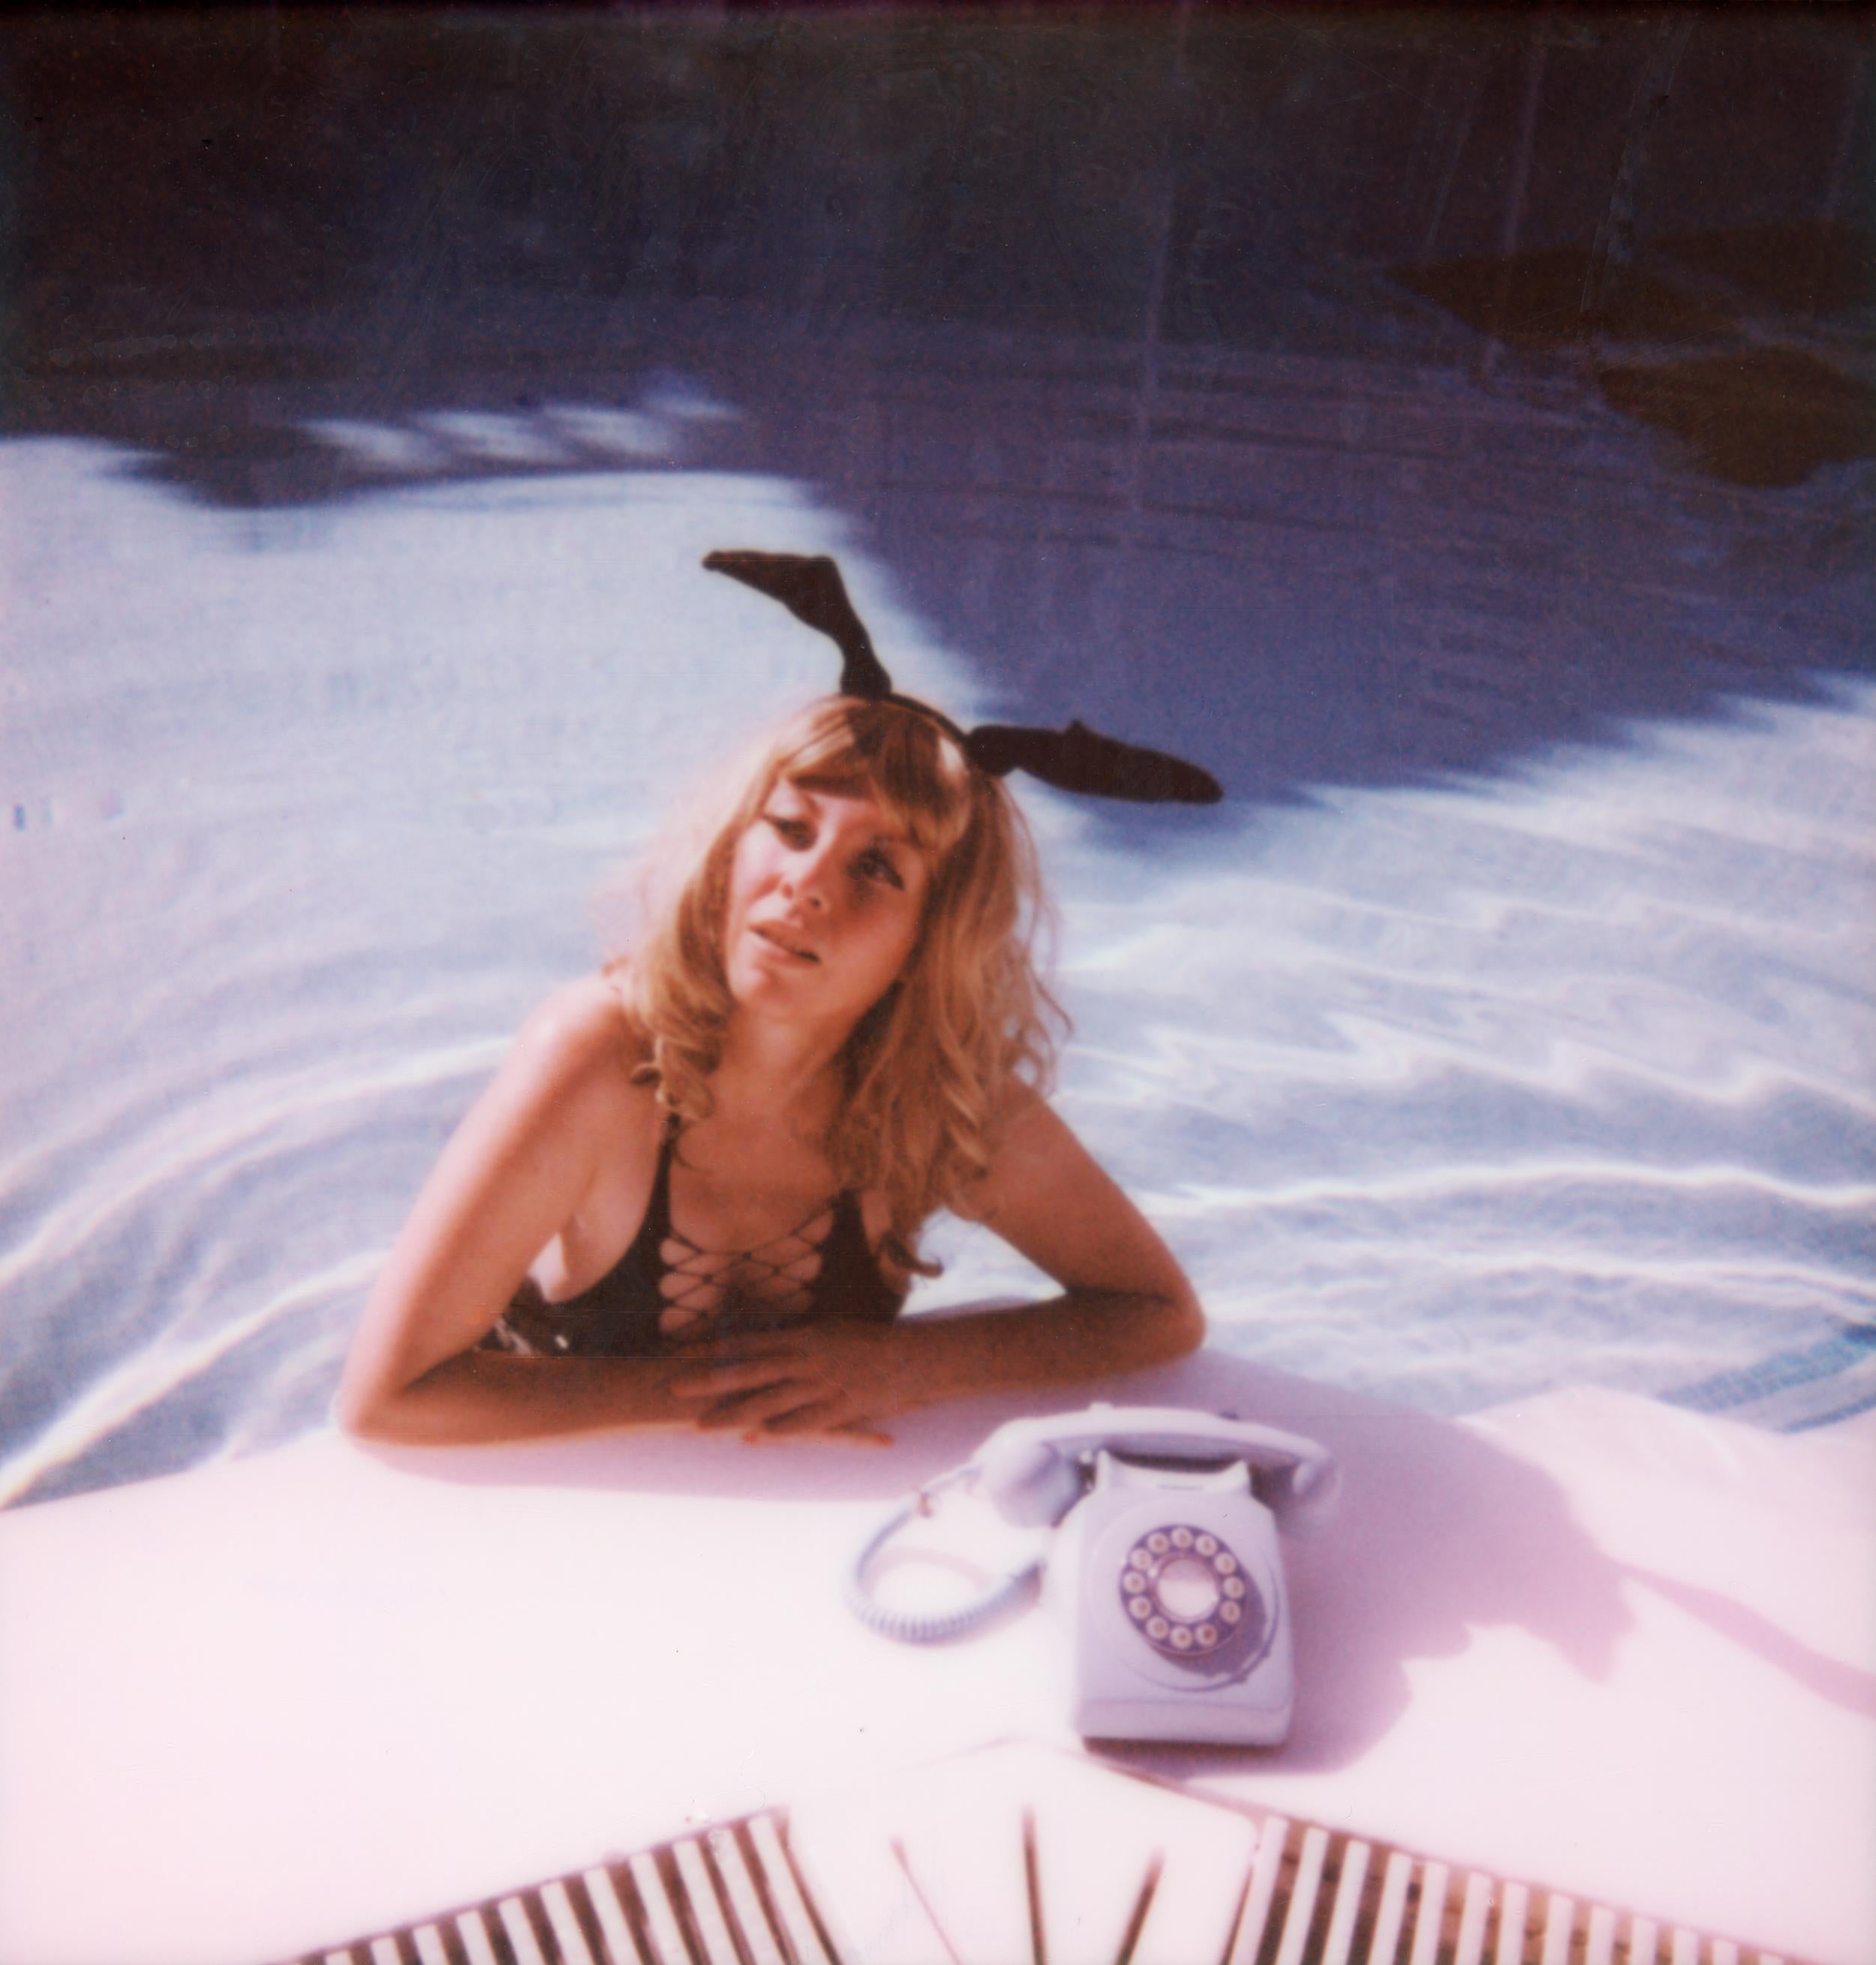 Pool Bunny - Zeitgenössisch, Polaroid, Frau, 21. Jahrhundert, Nackt, Psychiatrie